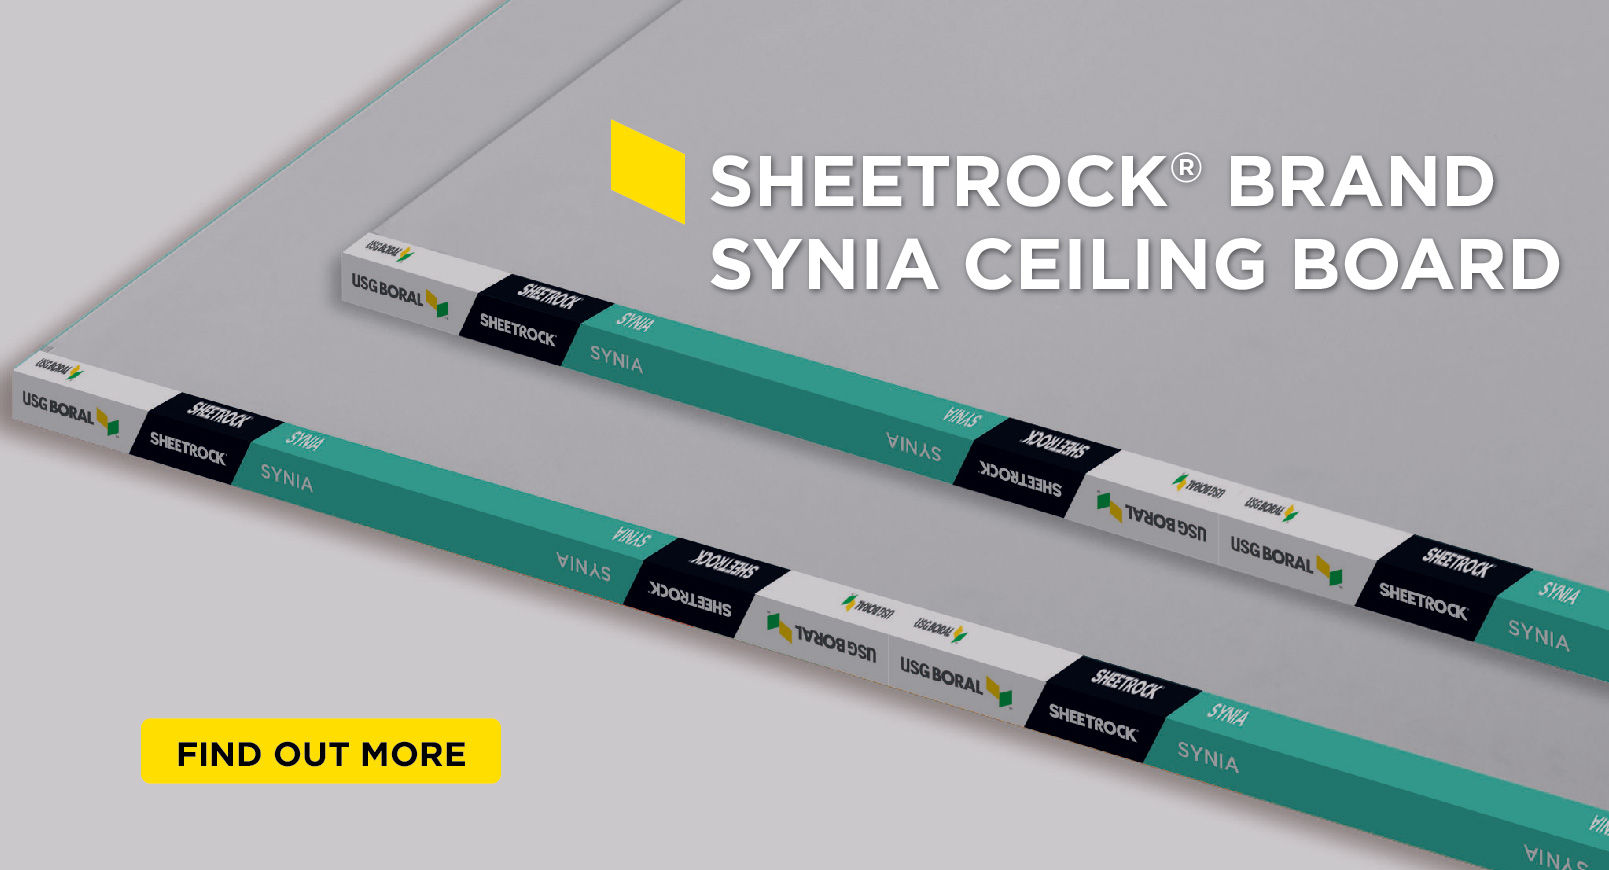 Sheetrock brand Synia ceiling board